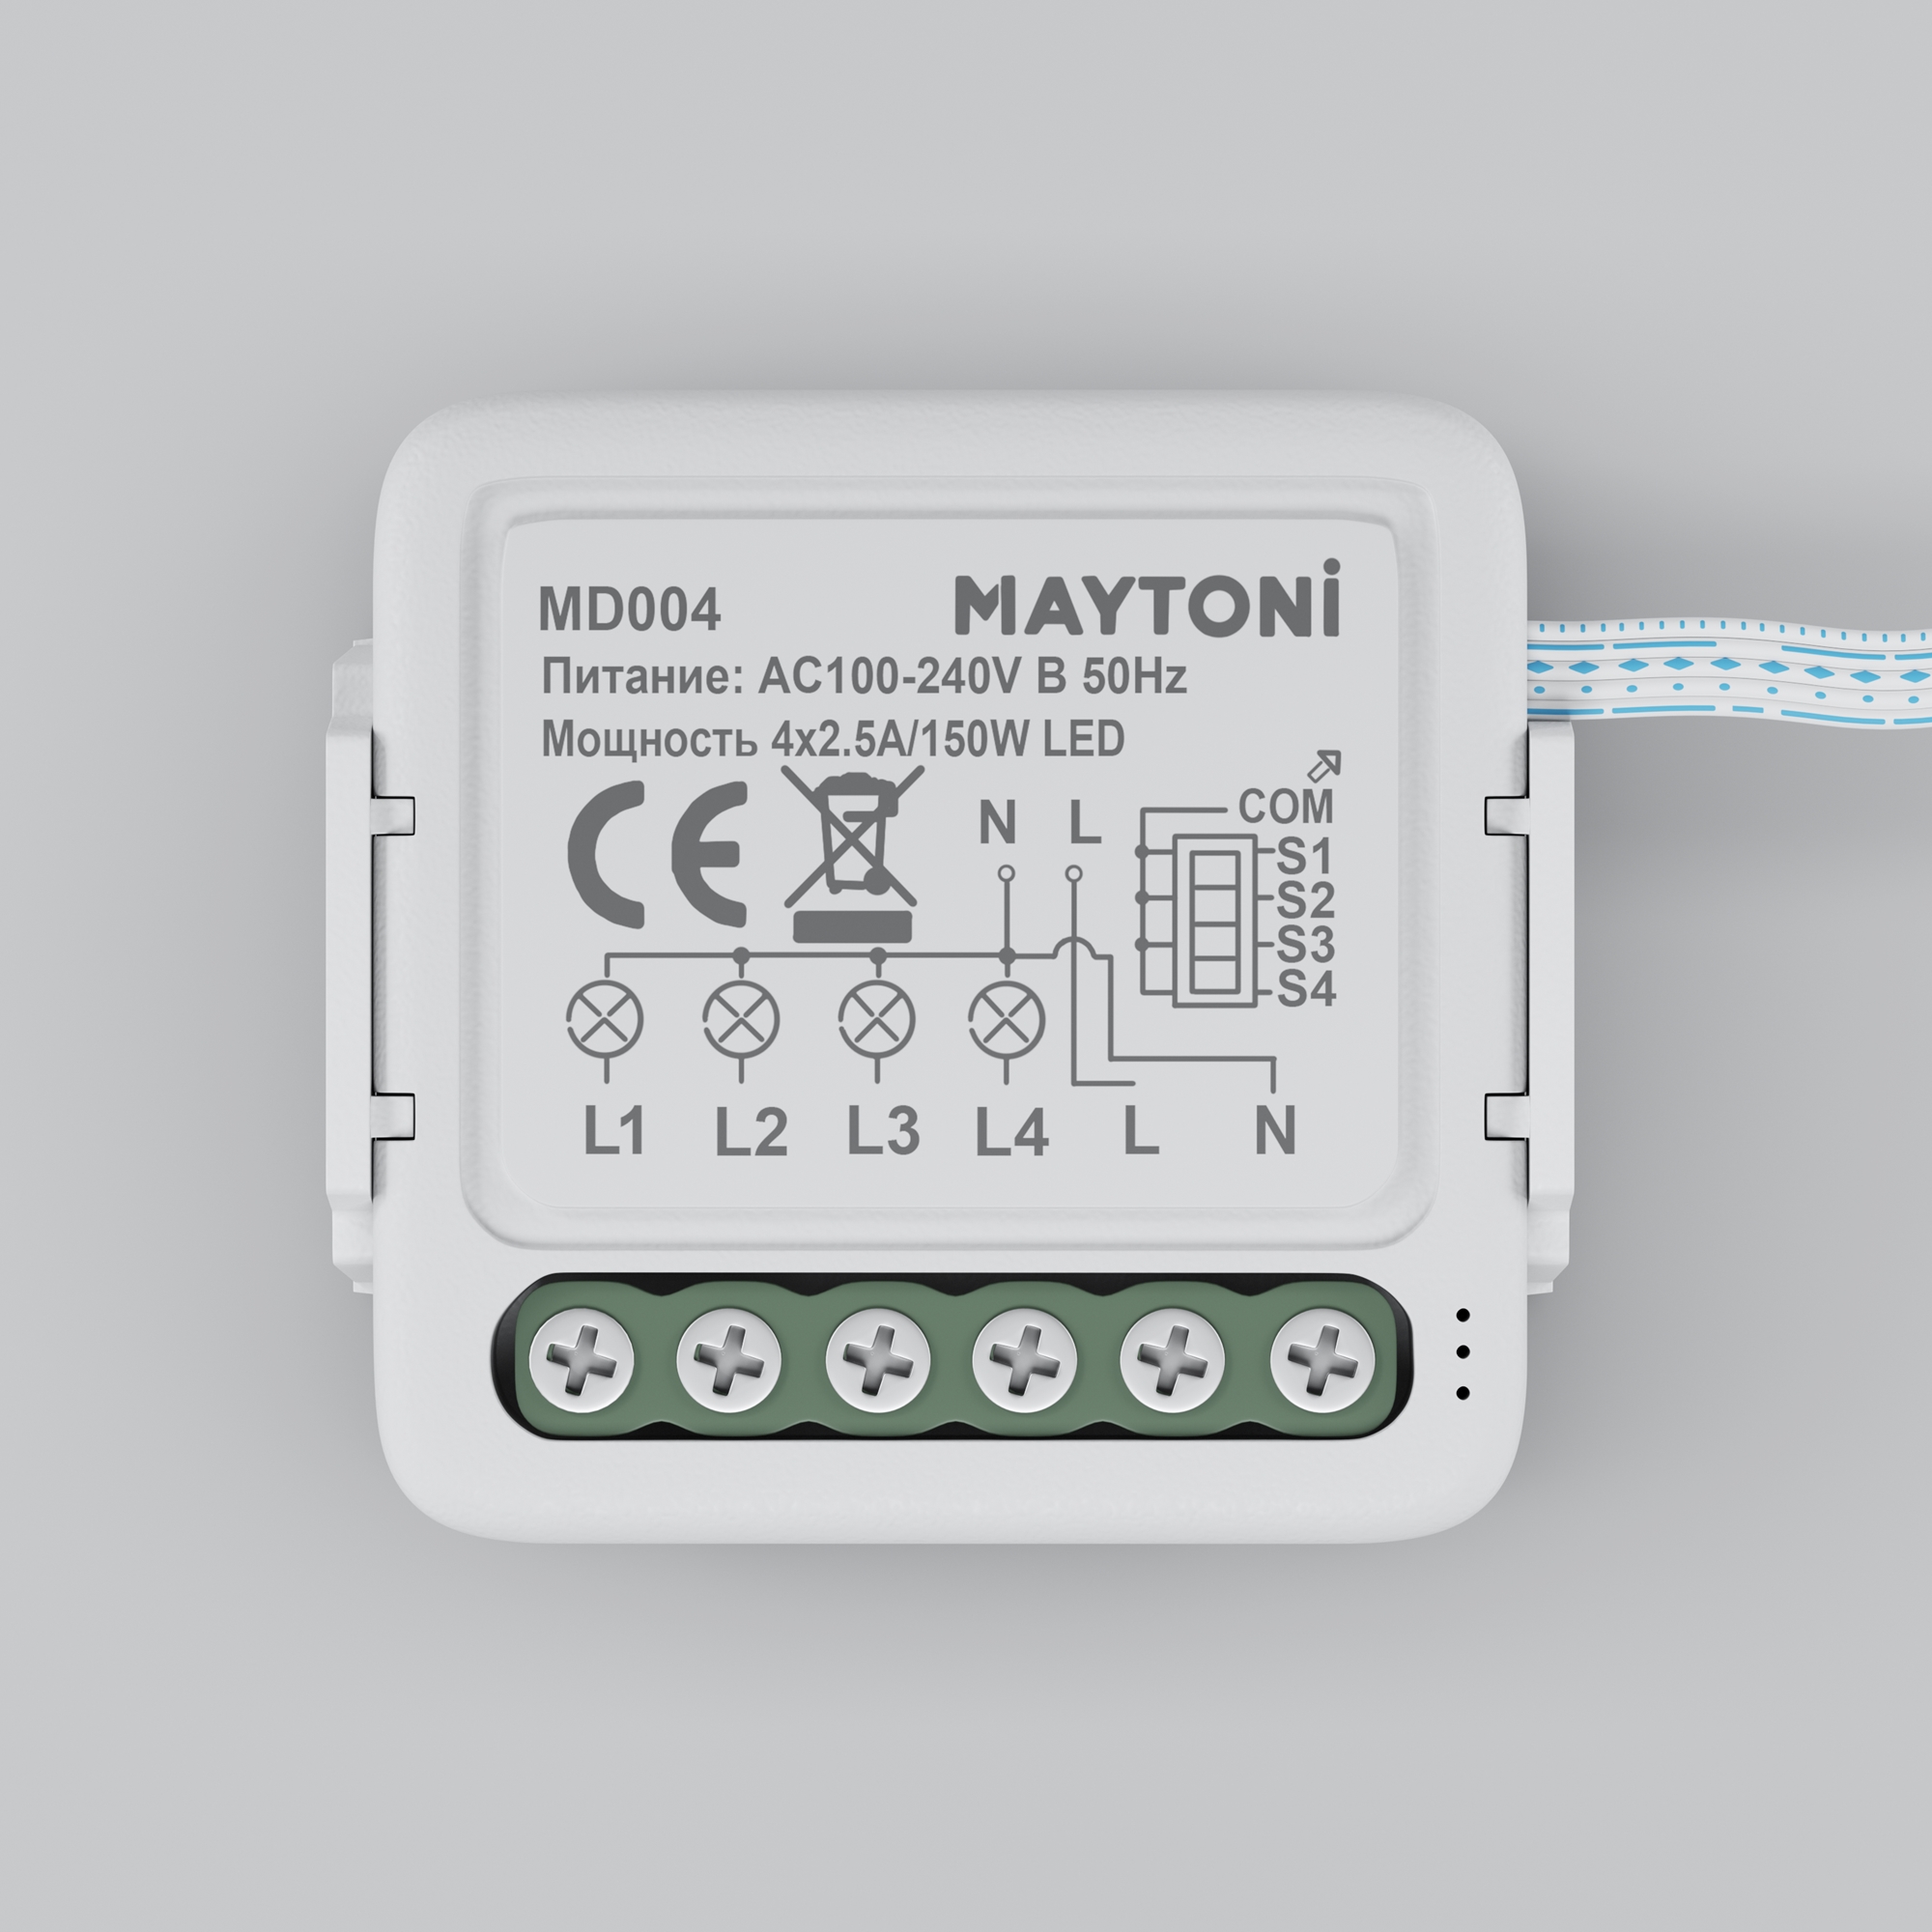 Реле Wi-Fi Maytoni MD004, цвет белый - фото 5